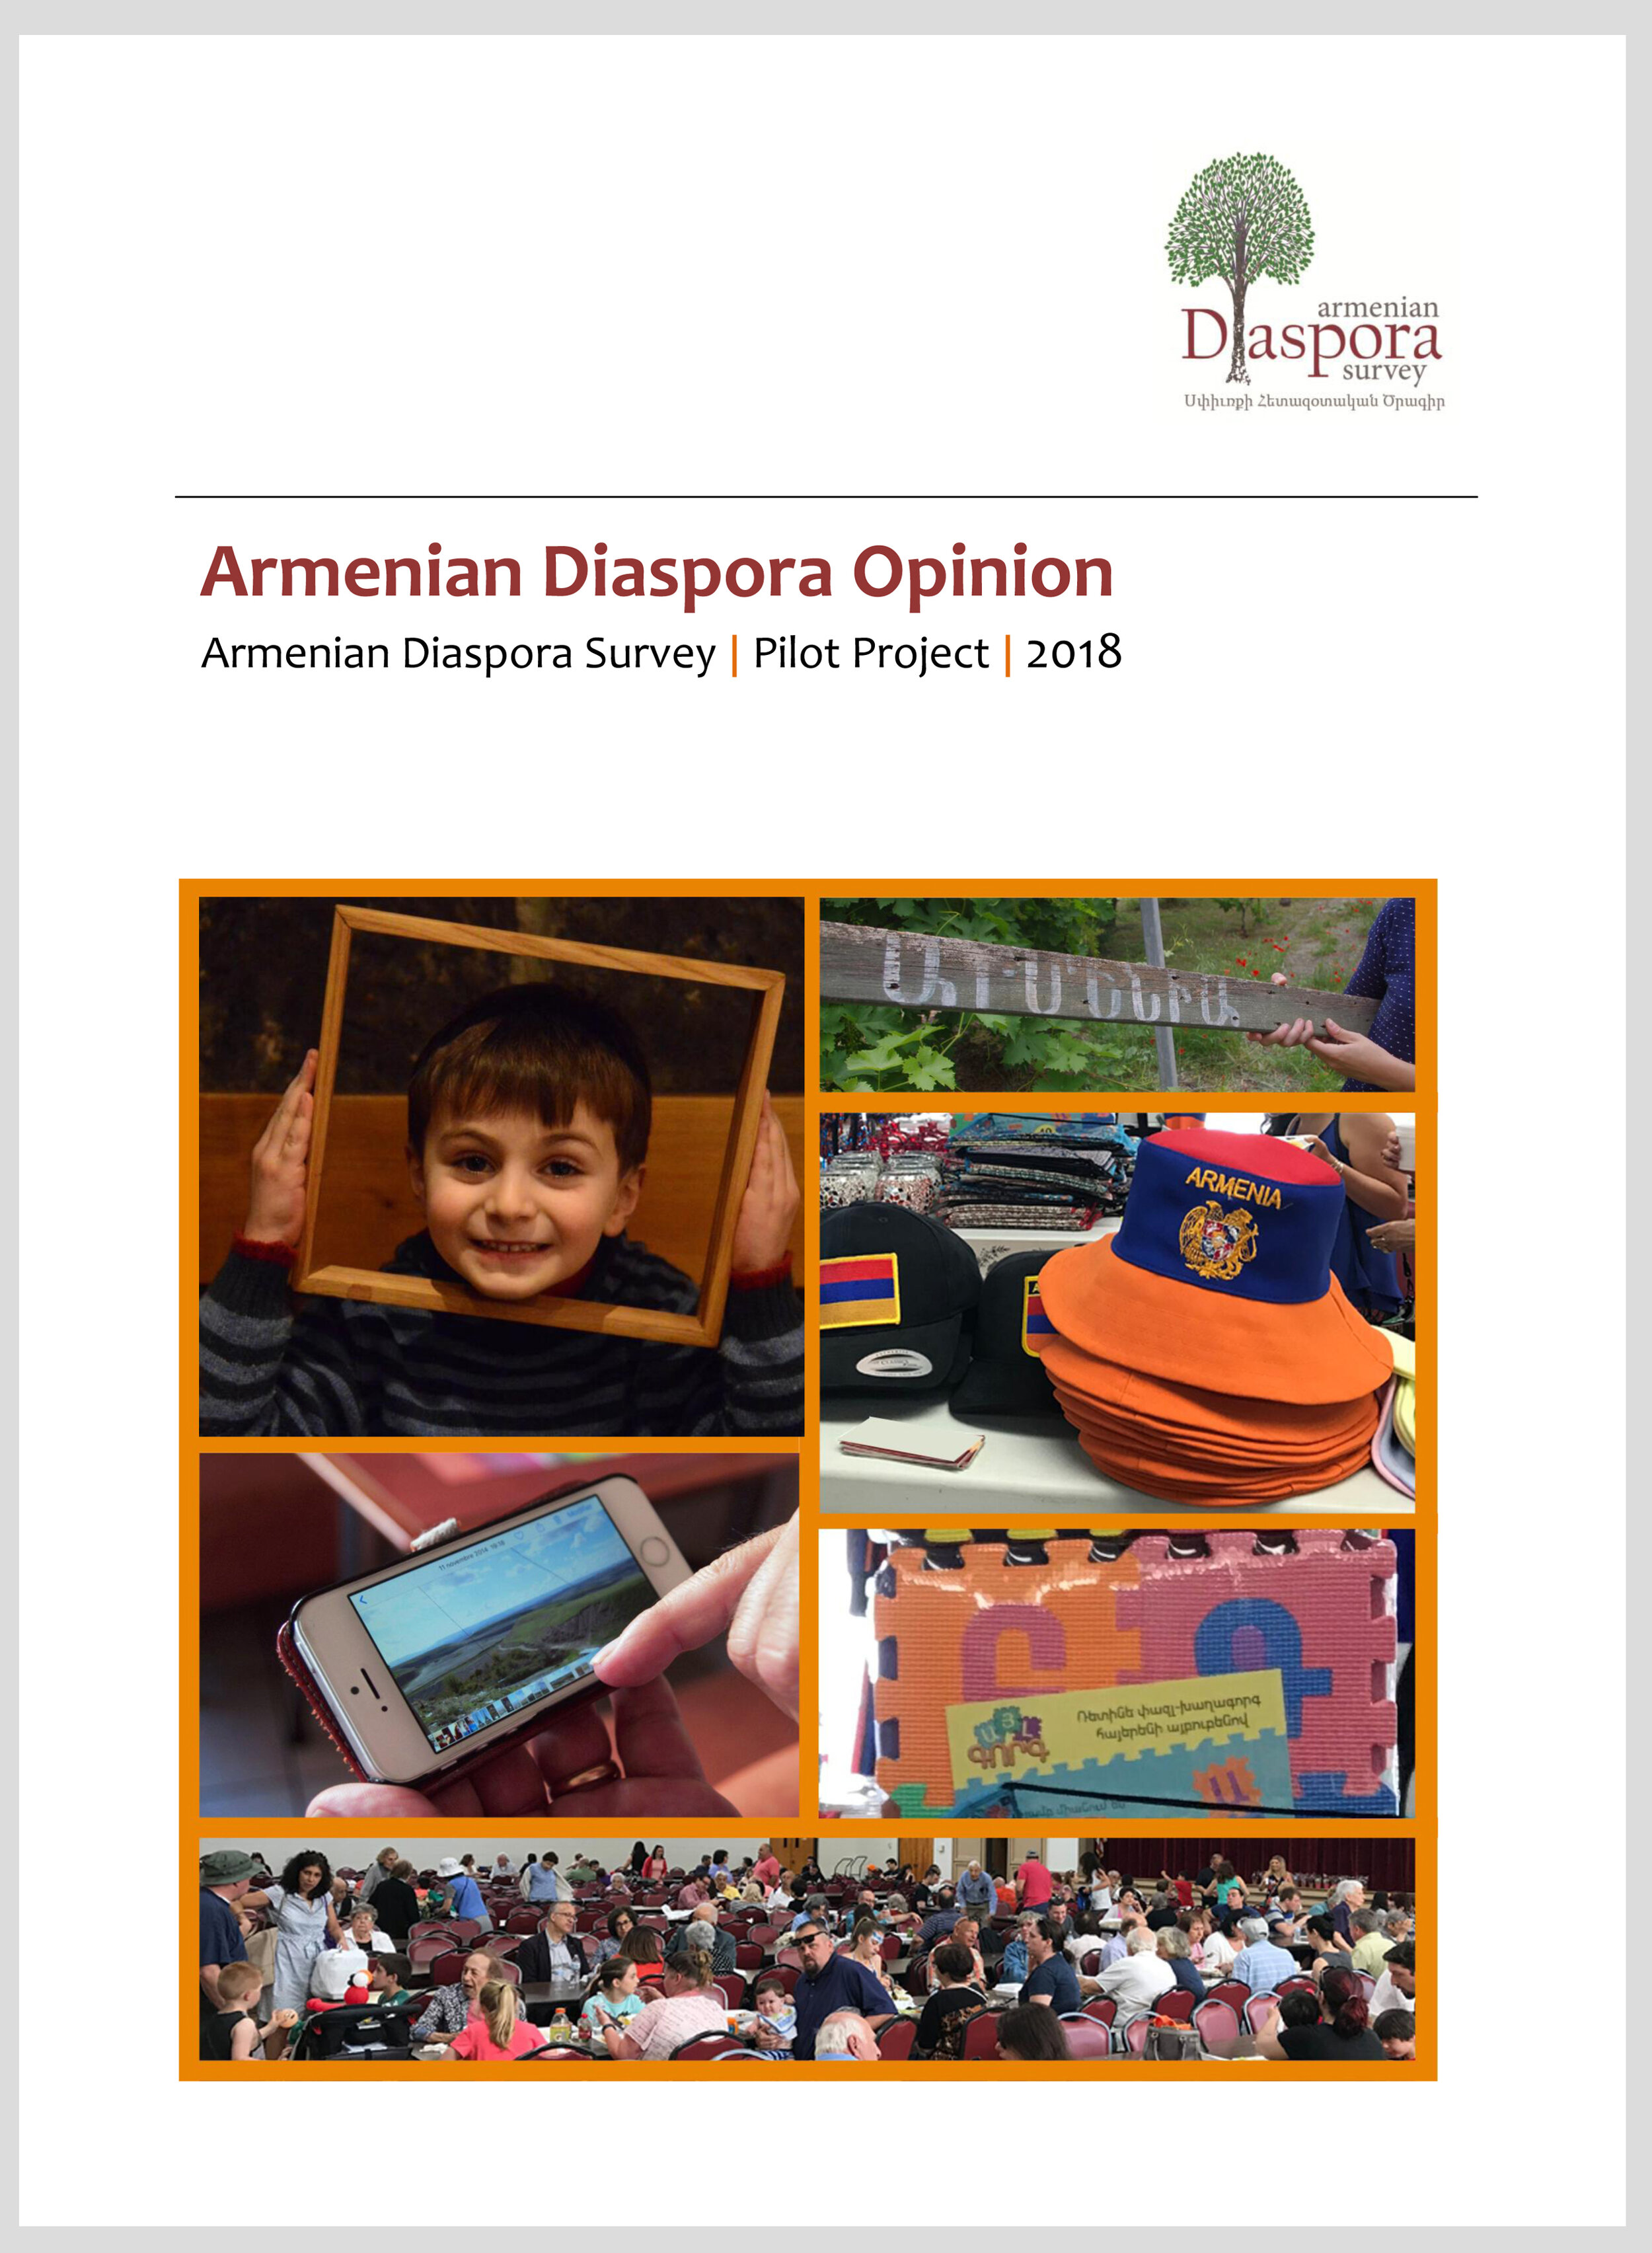 Language and Identity in the Armenian Diaspora